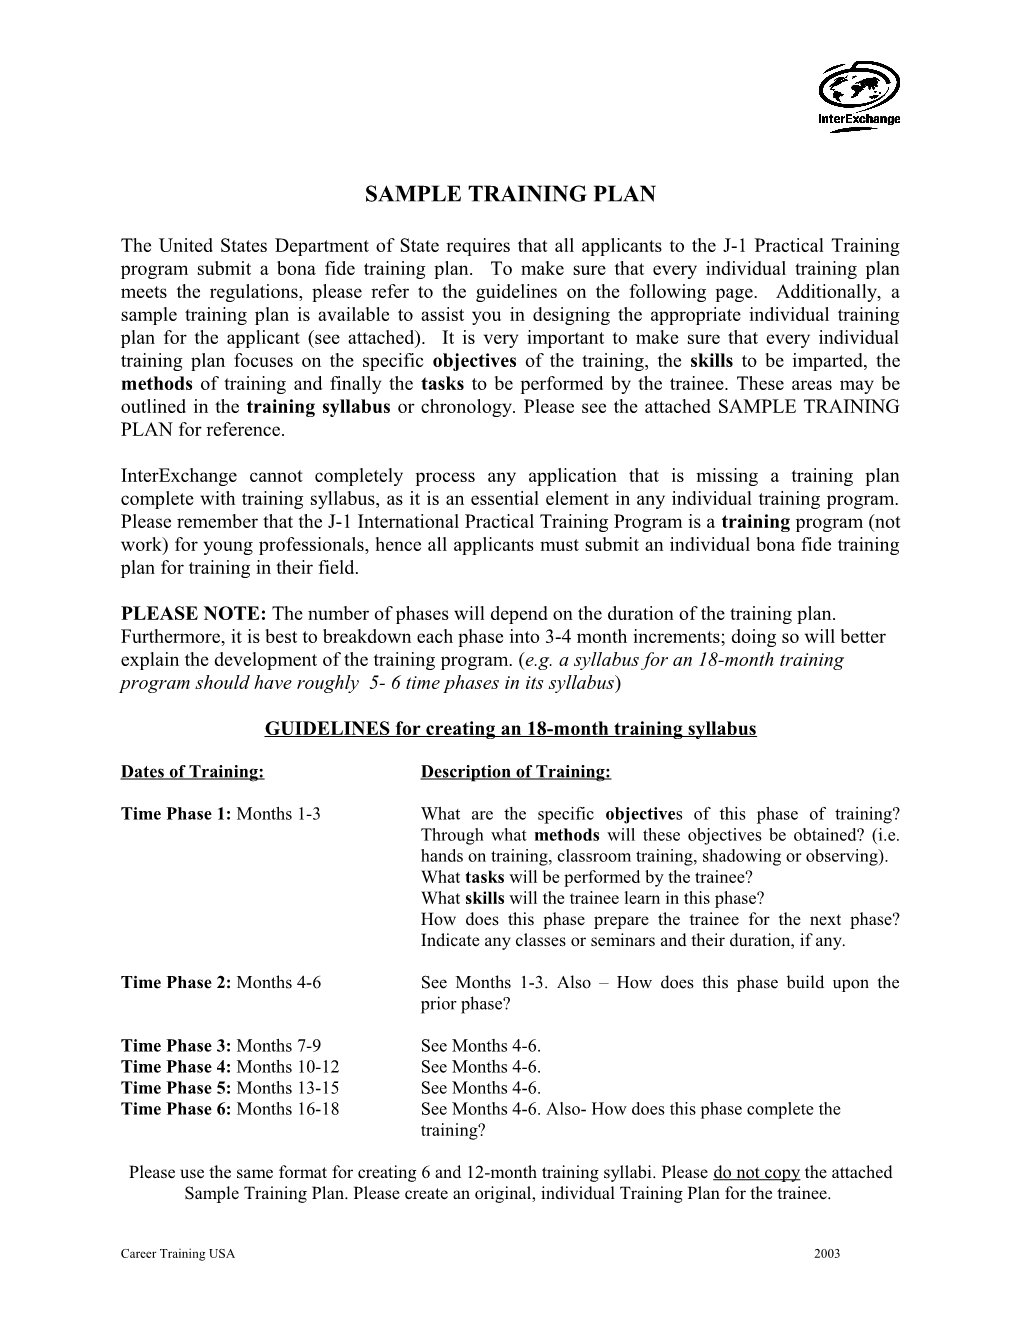 Creating a Bona Fide Training Plan